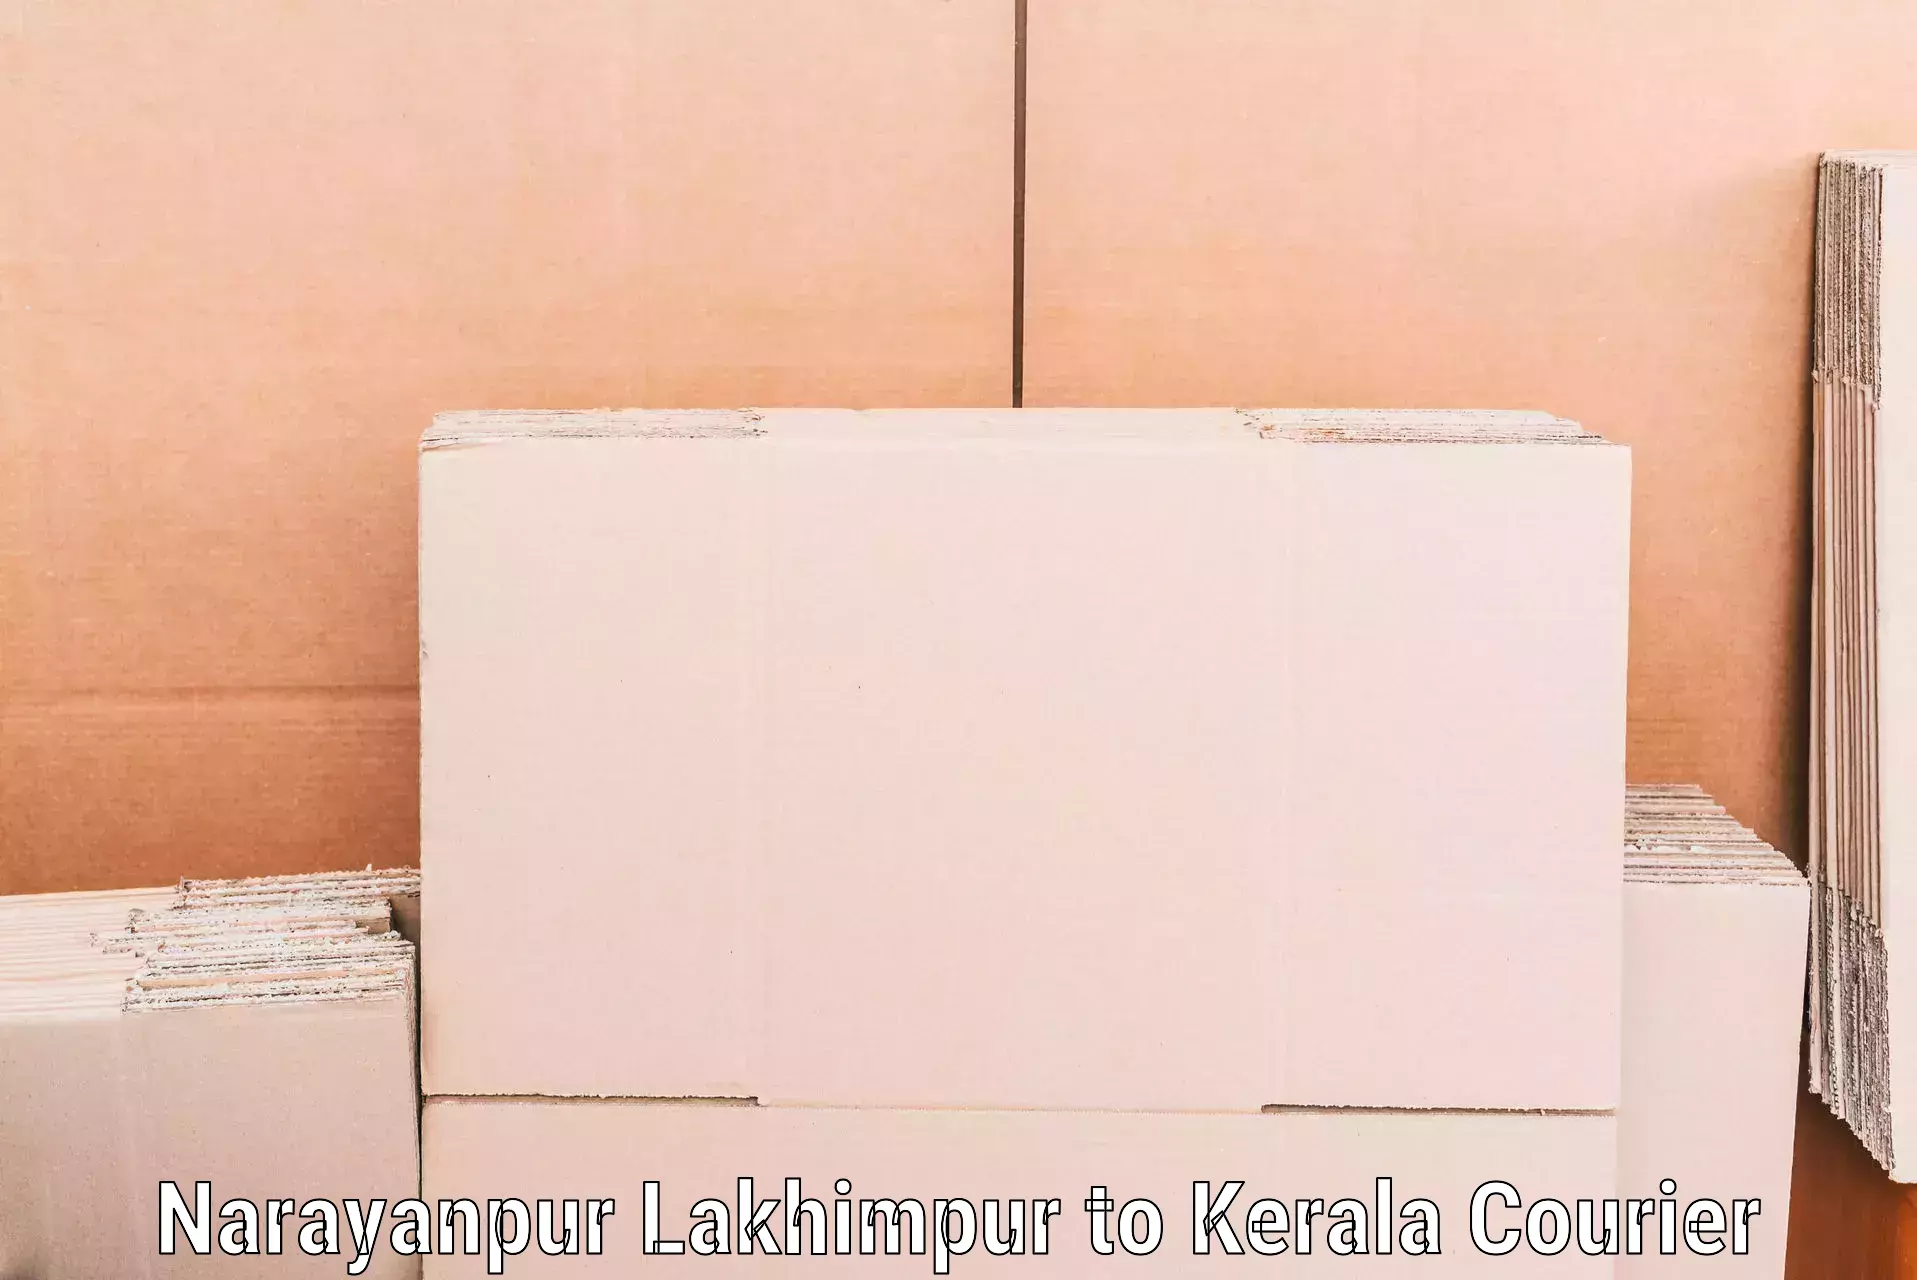 Furniture moving specialists Narayanpur Lakhimpur to Kattappana